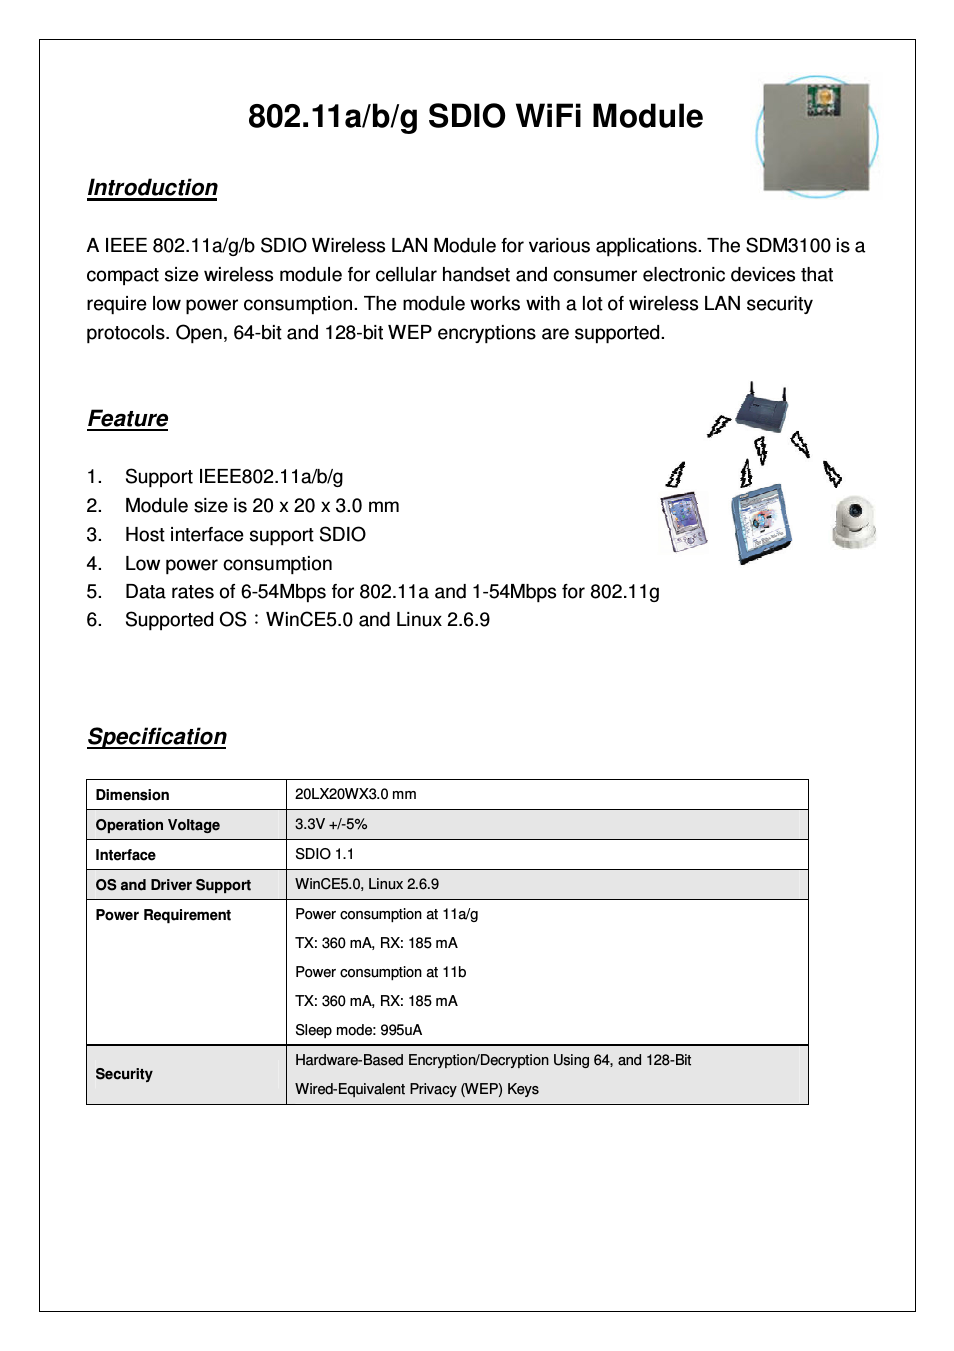 802.11a/b/g SDIO WiFi Module SDM3100